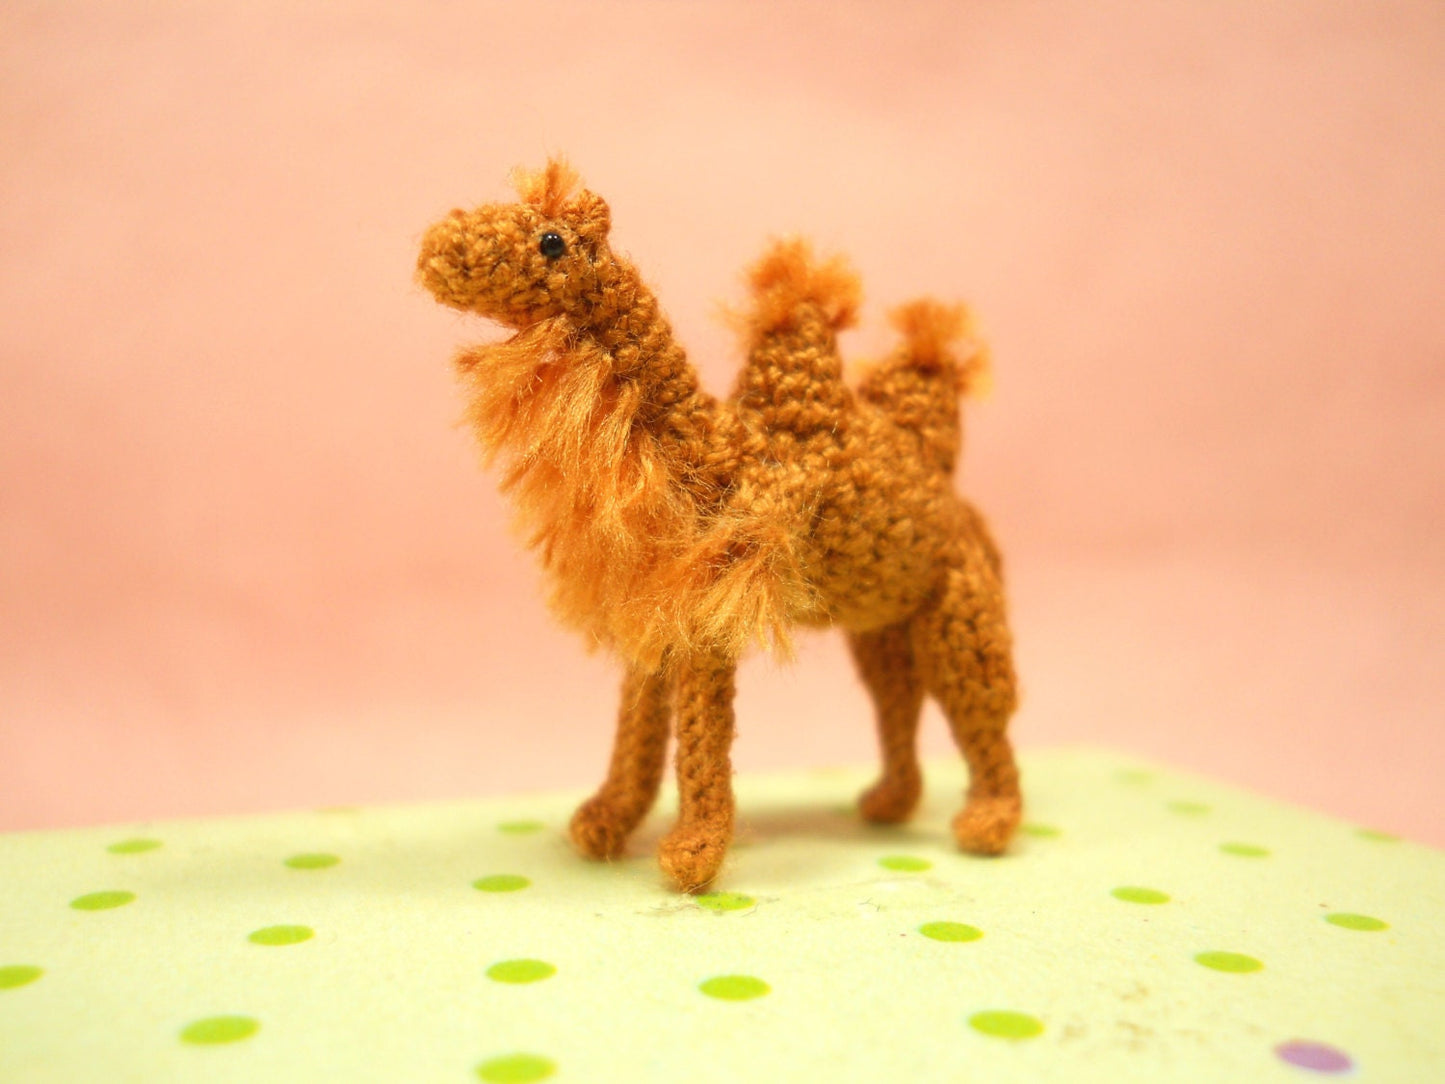 1 Inch Bactrian Camel Amigurumi - Micro Miniature Crochet Stuffed Animals - Made To Order